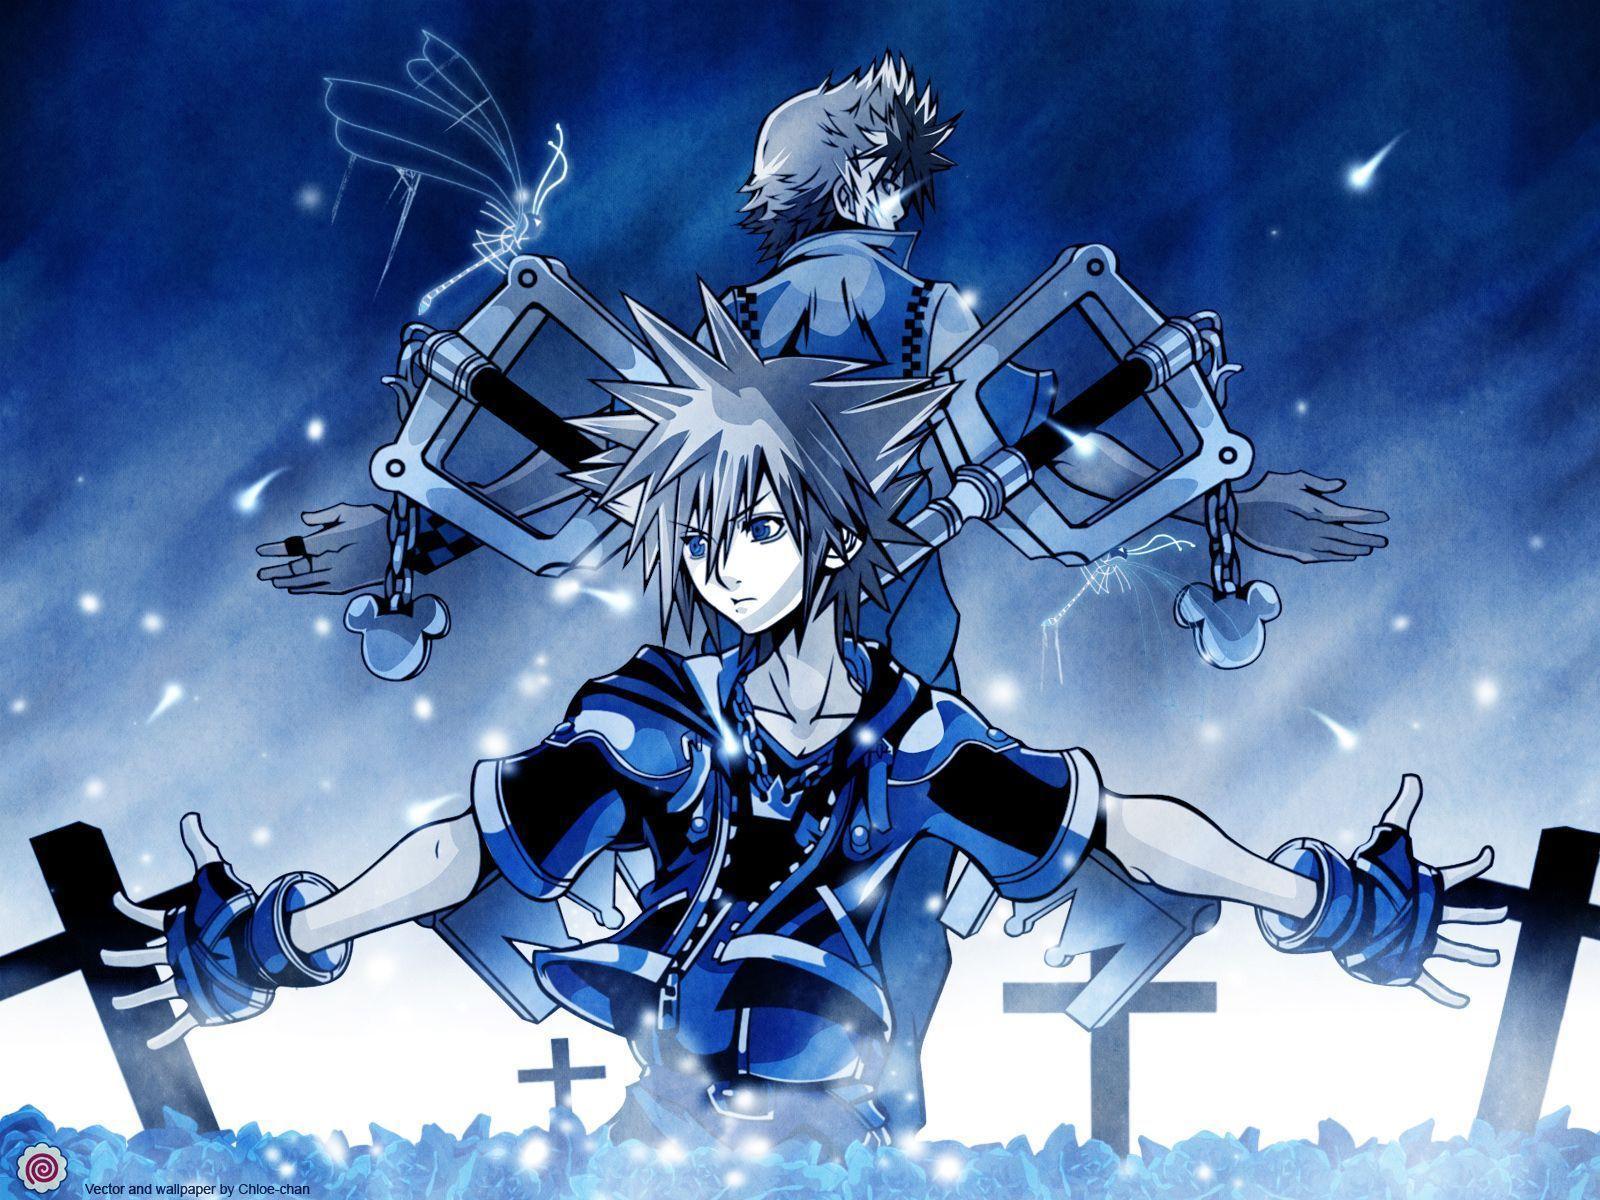 Kingdom Hearts Roxas Wallpaper Image & Picture